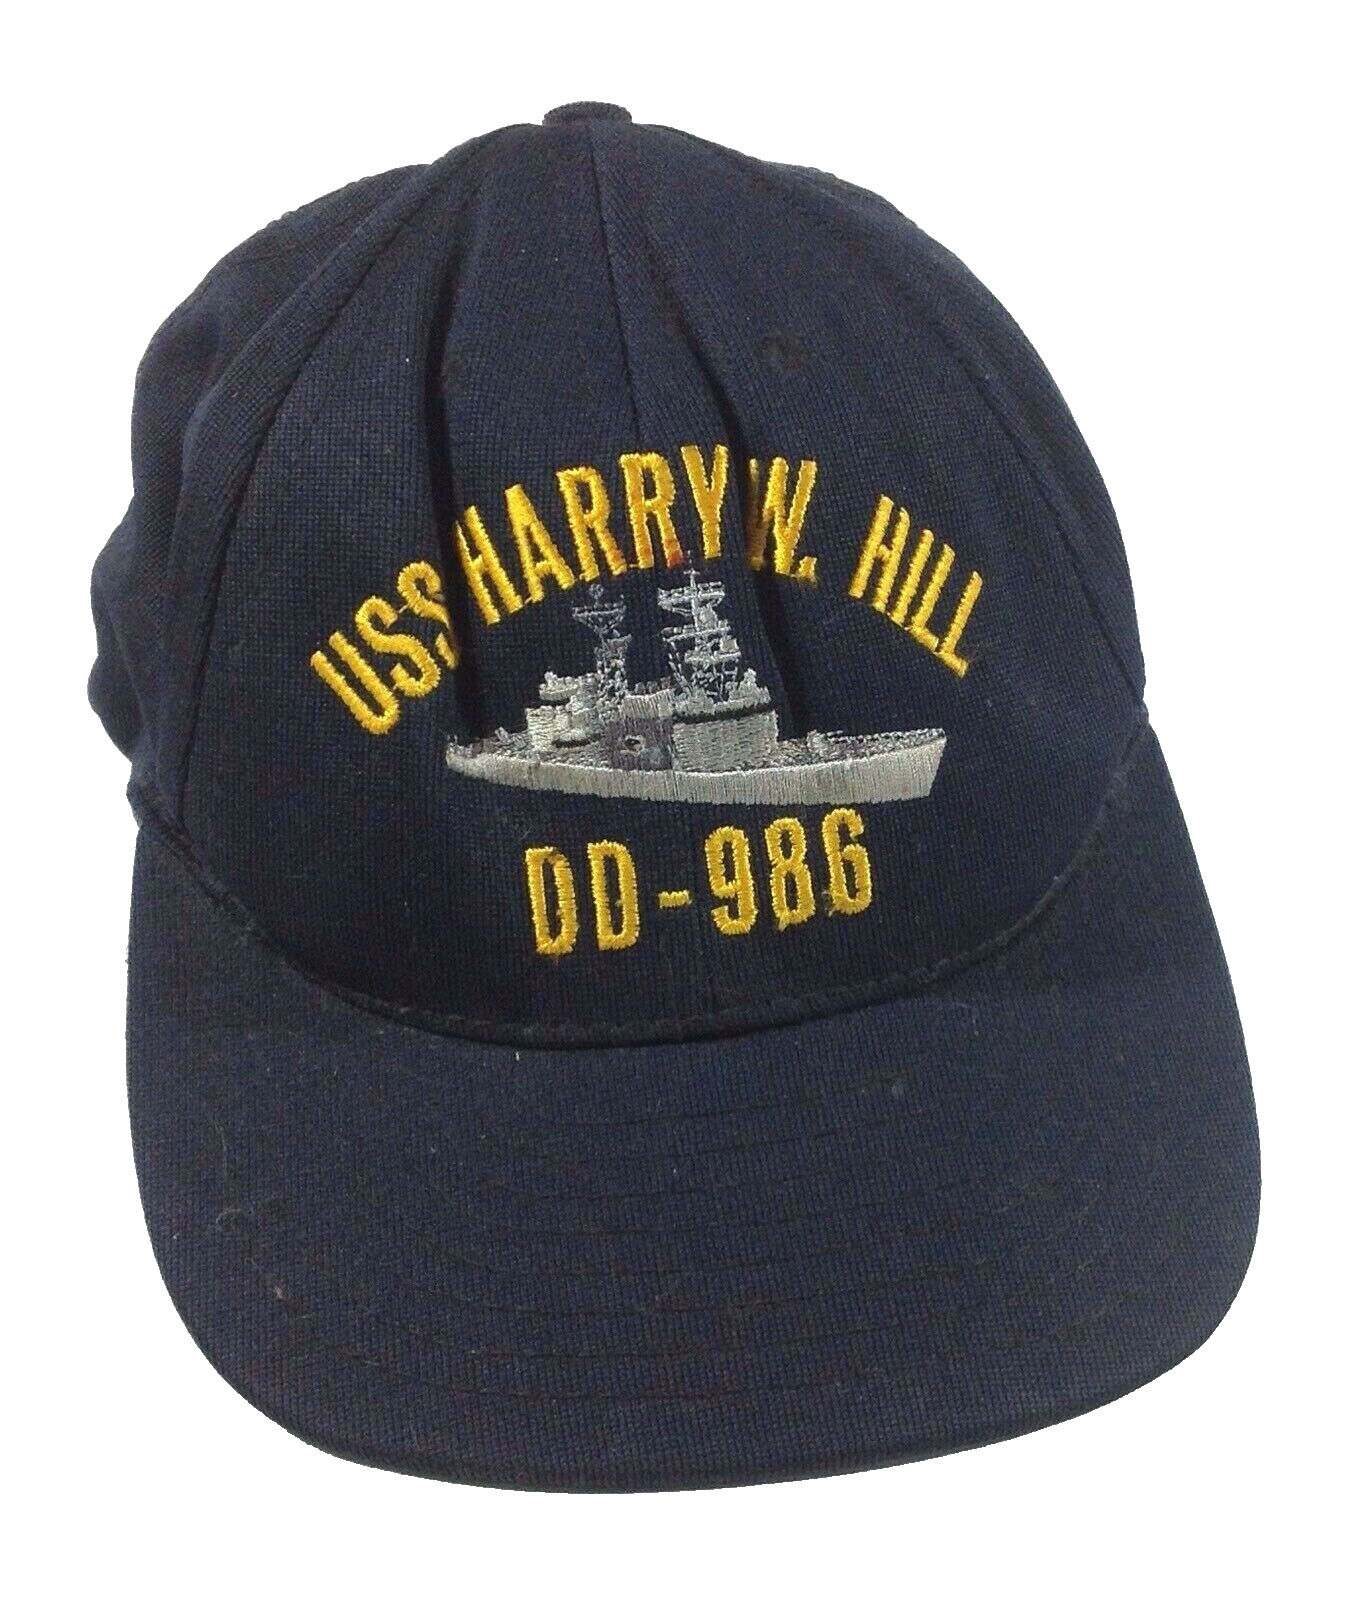 USS Harry W Hill DD-986 Snapback Cap US Navy Destroyer Clean Gulf War Iraq